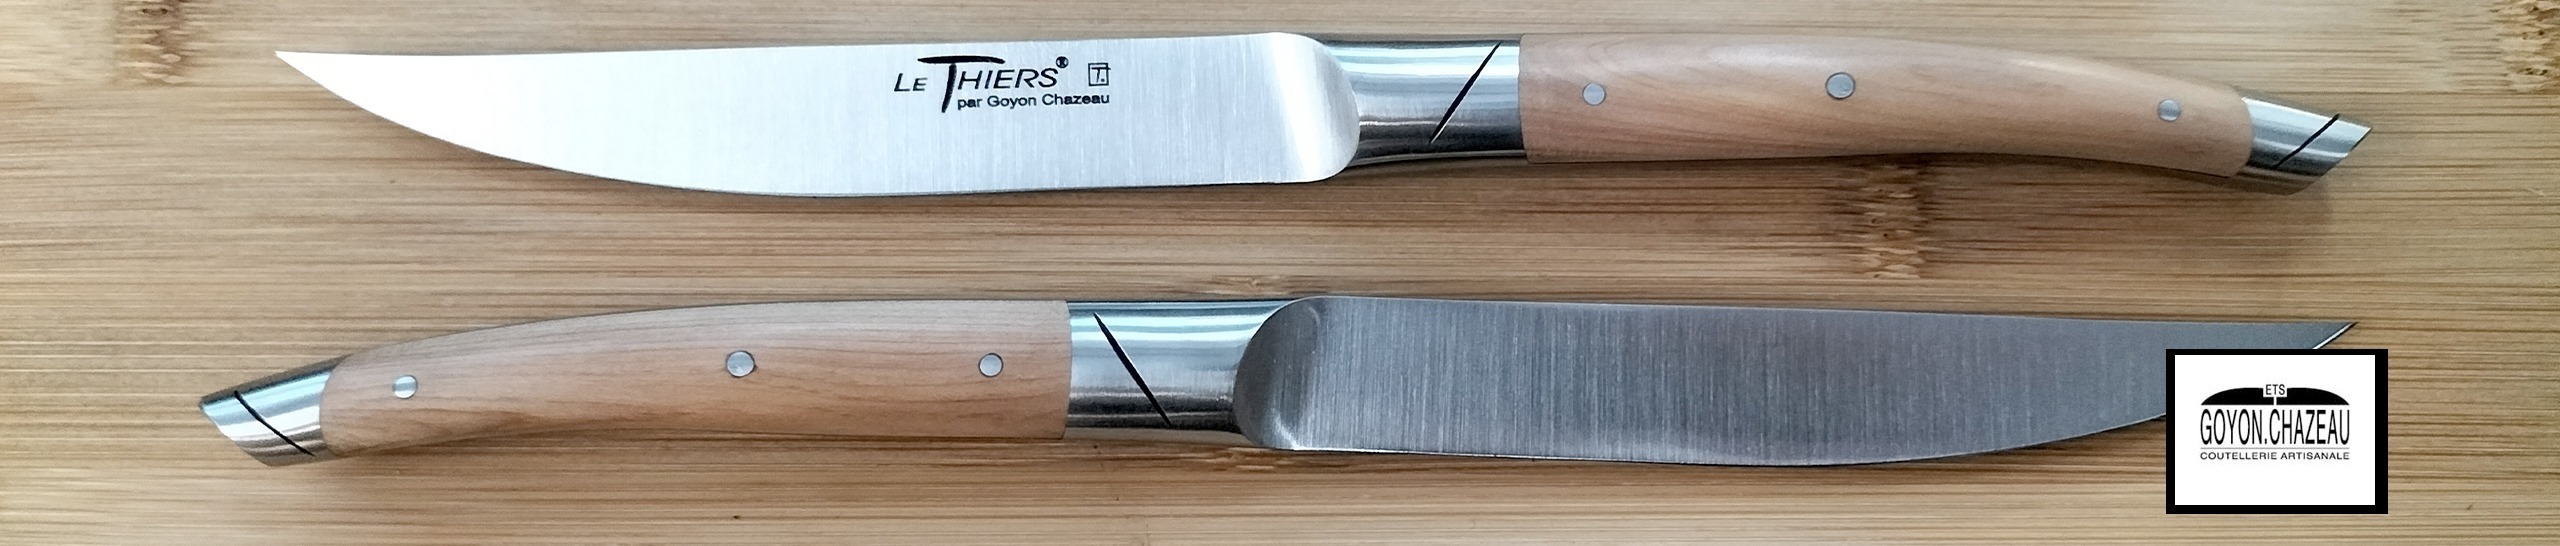 artisan coutellier goyon chazeau couteau